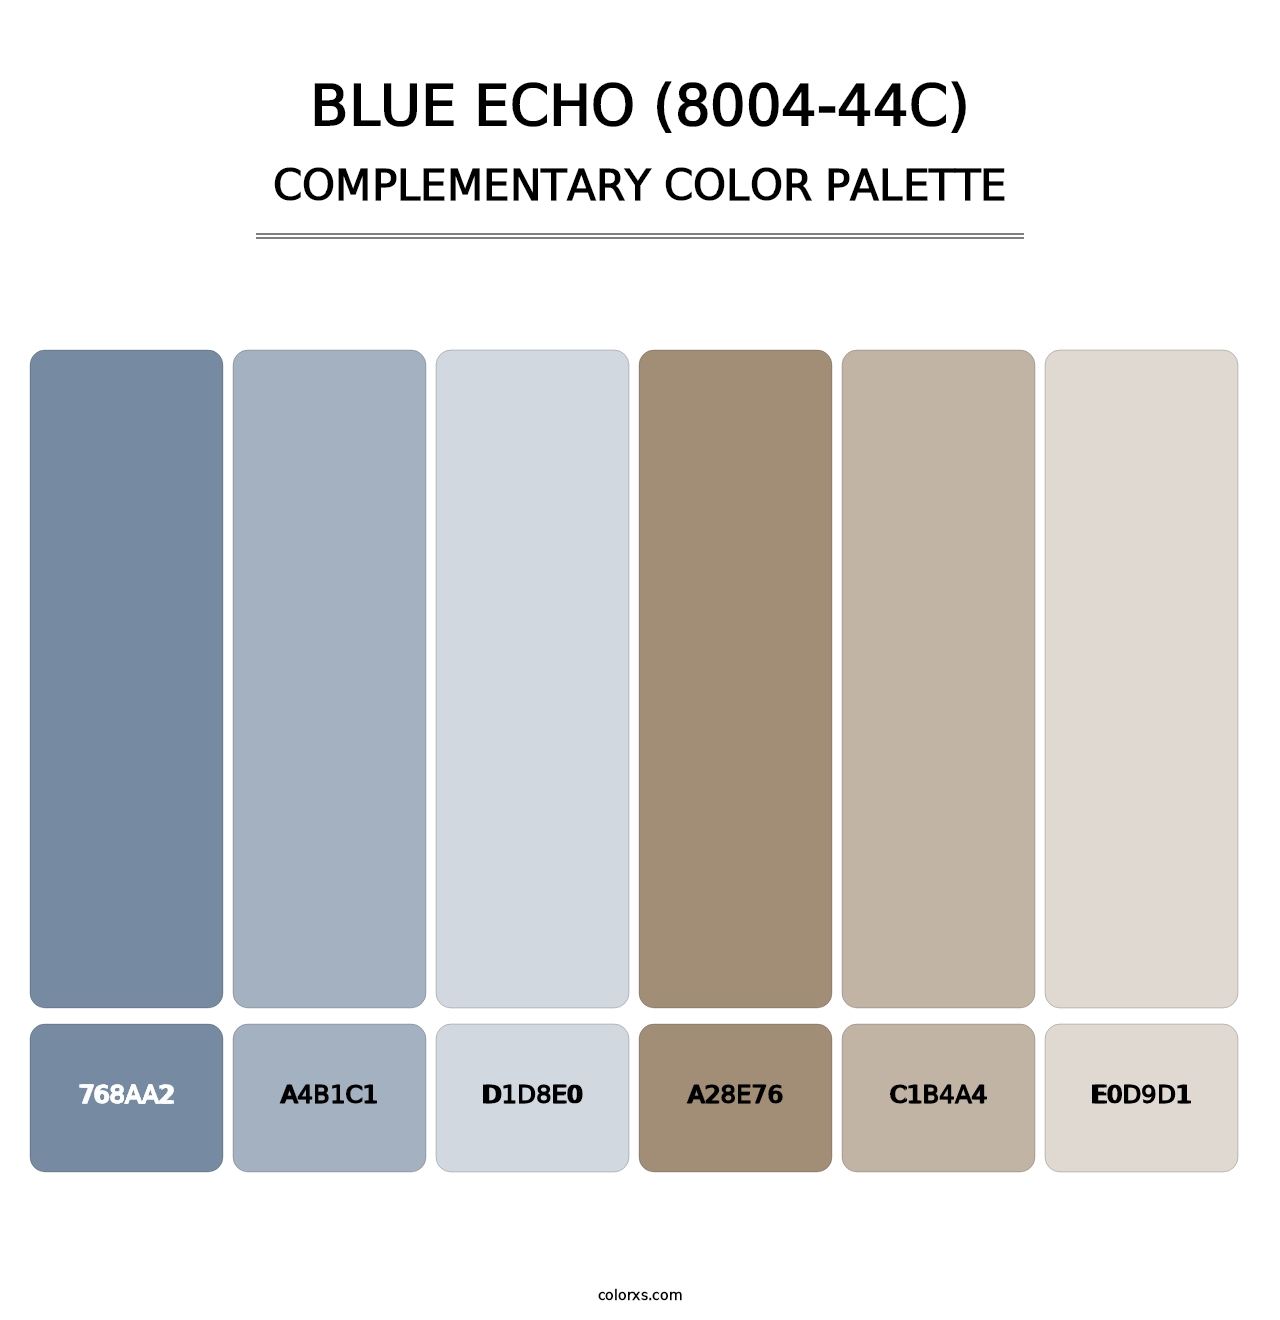 Blue Echo (8004-44C) - Complementary Color Palette